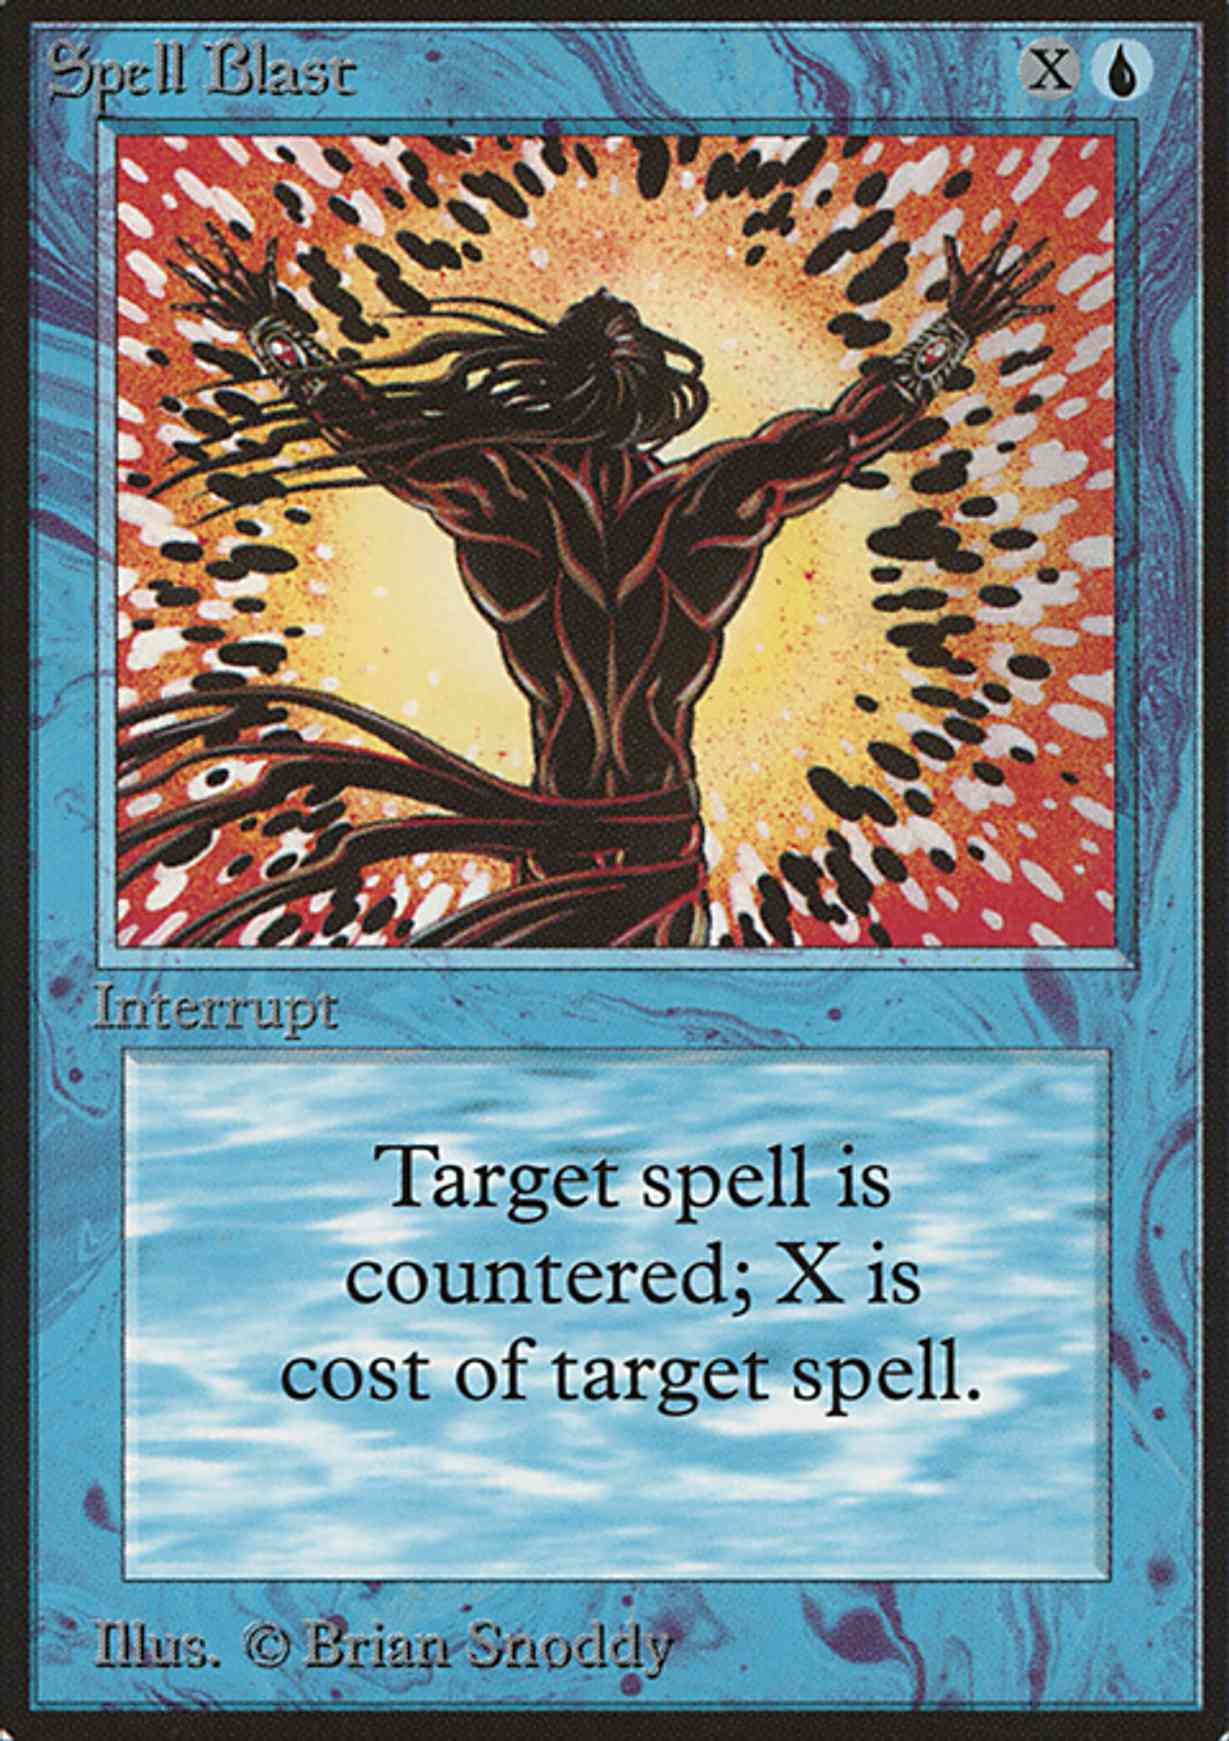 Spell Blast magic card front